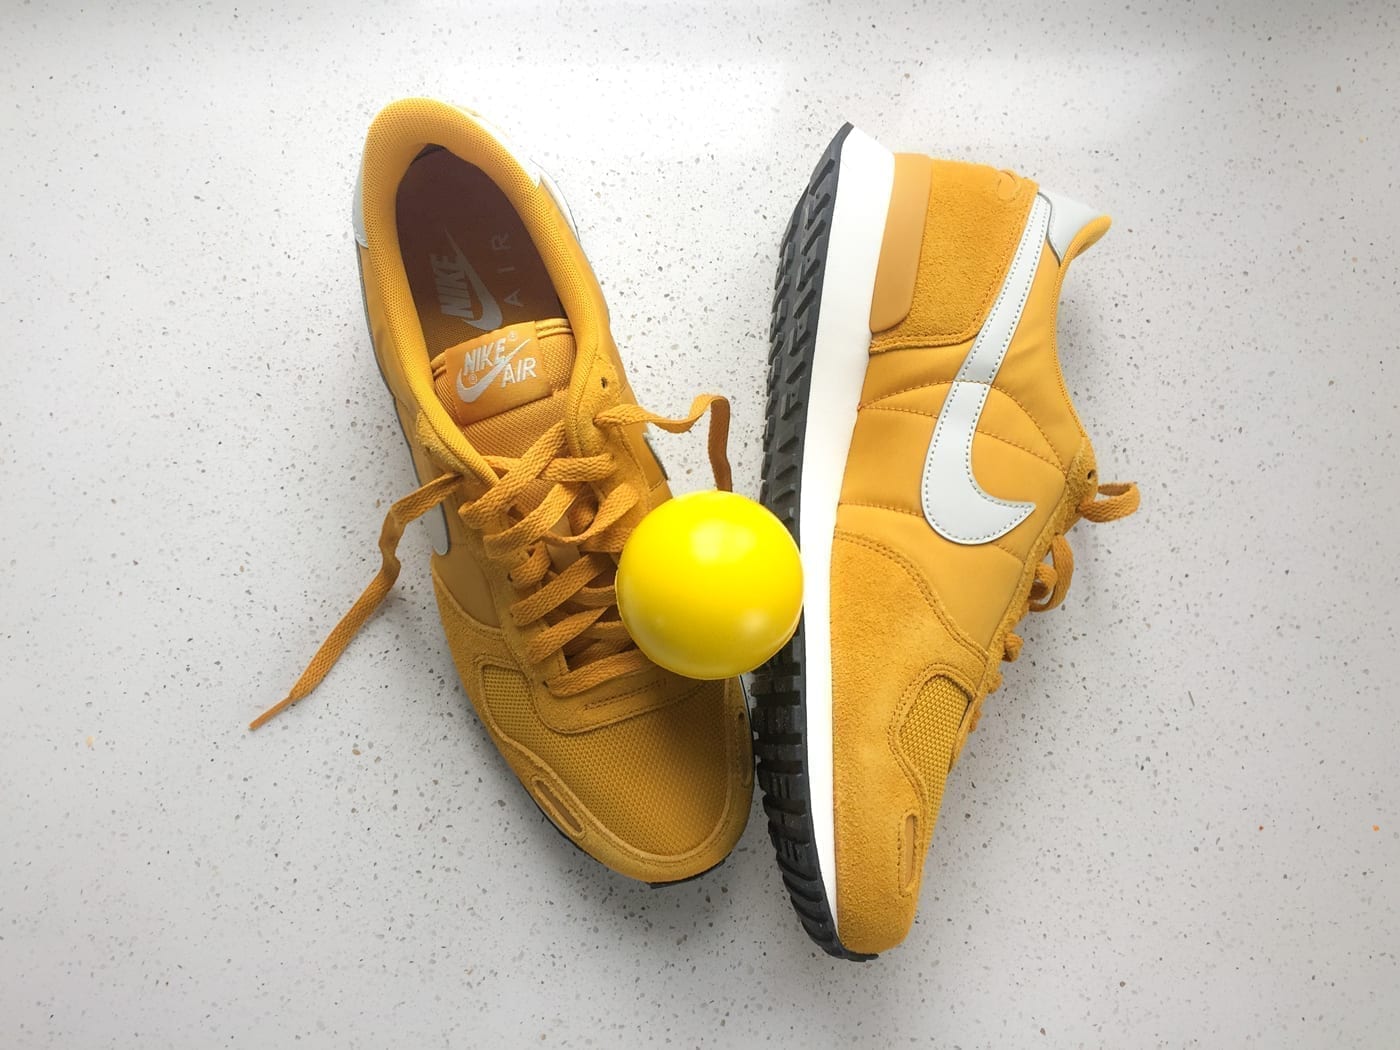 Featured image for “Gele schoenen”